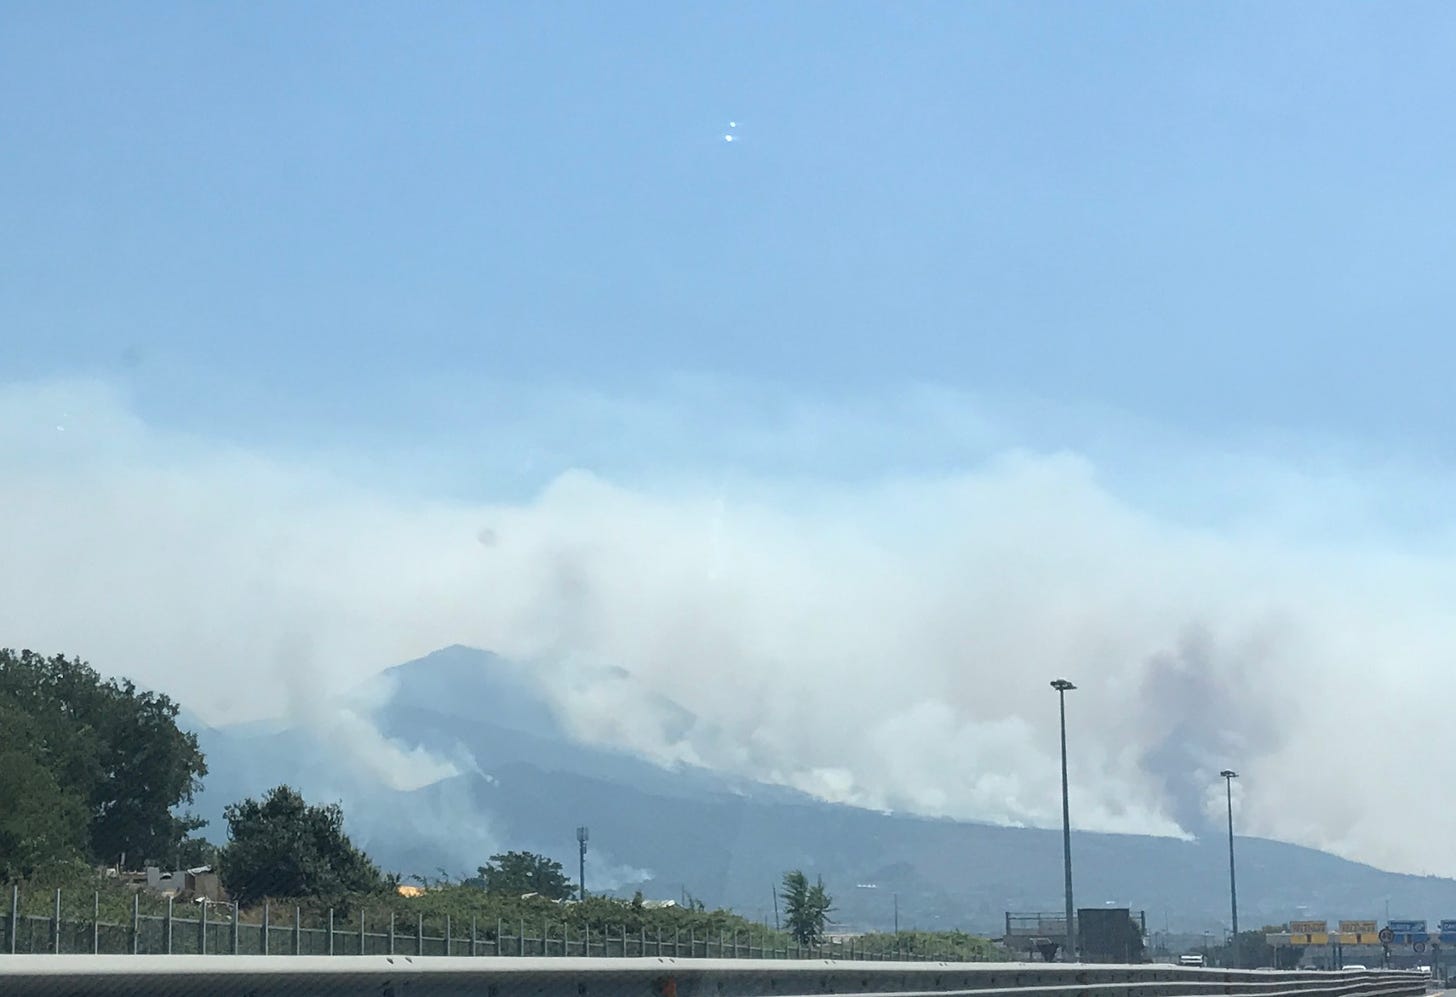 Toxic waste burning on Mount Vesuvius